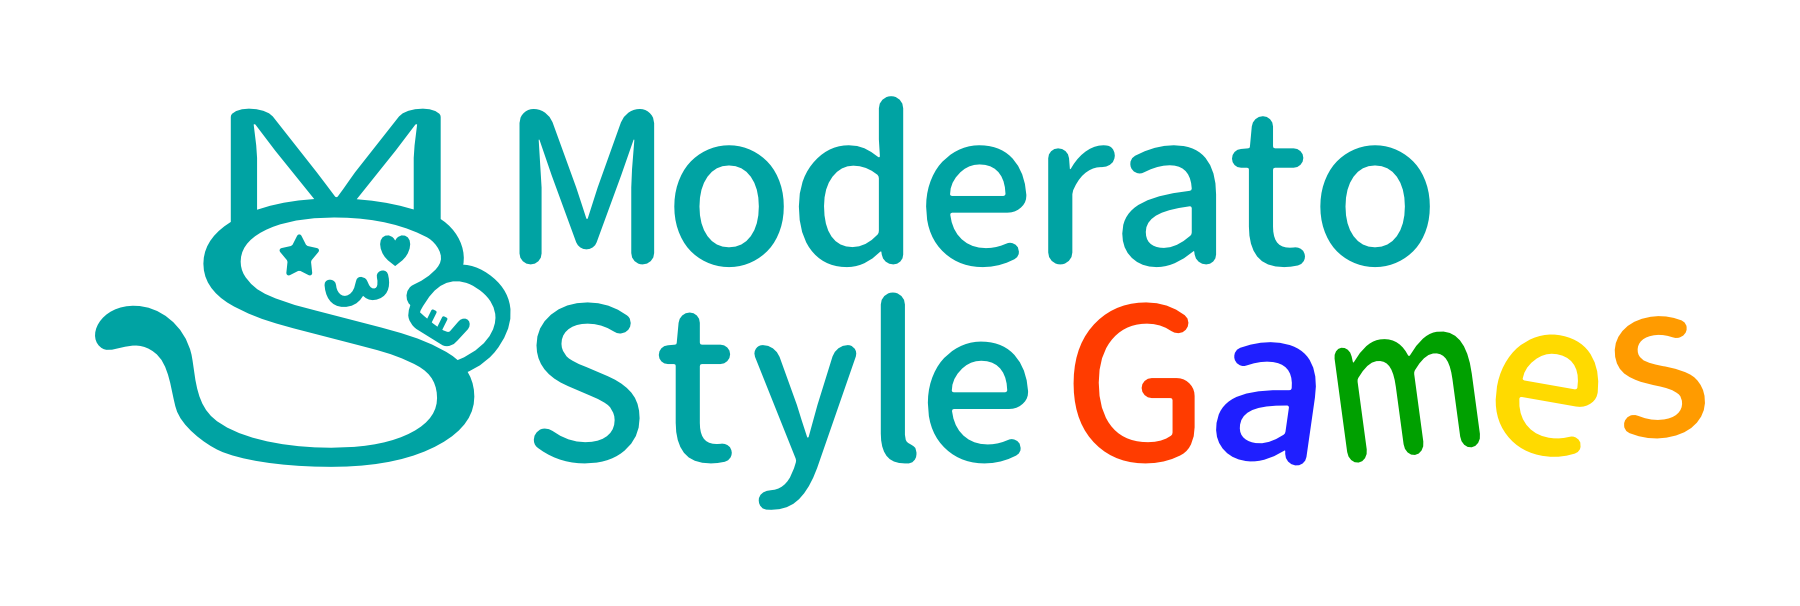 Moderato Style Games